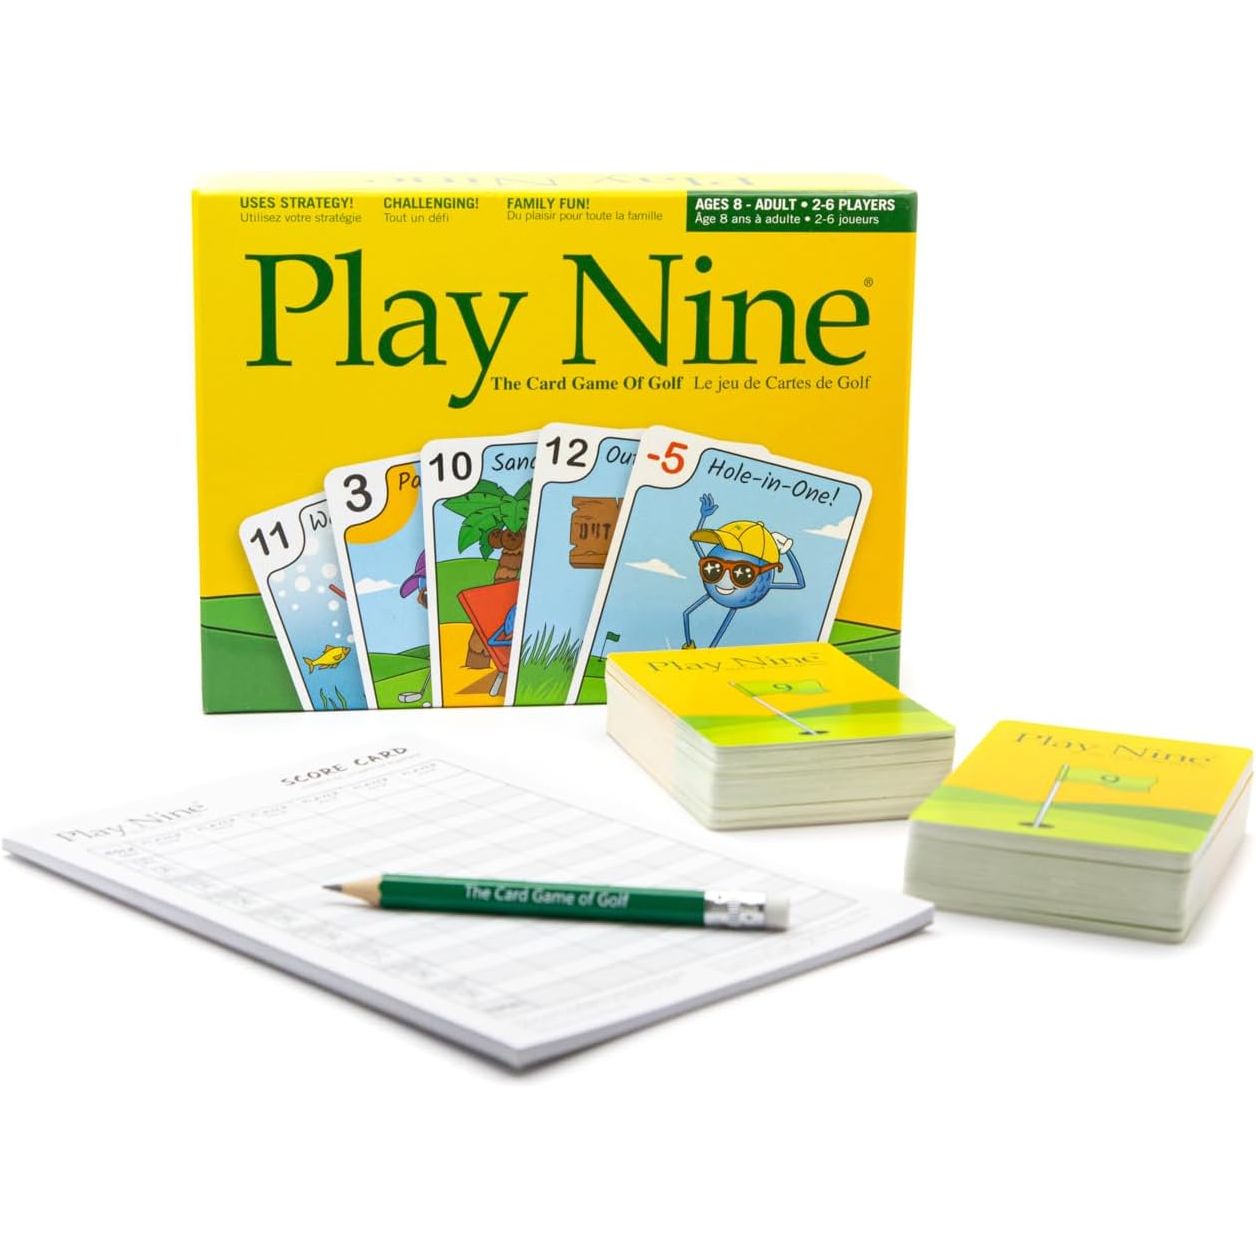 Bonfit Play Nine The Card Game of Golf Playibg Crads